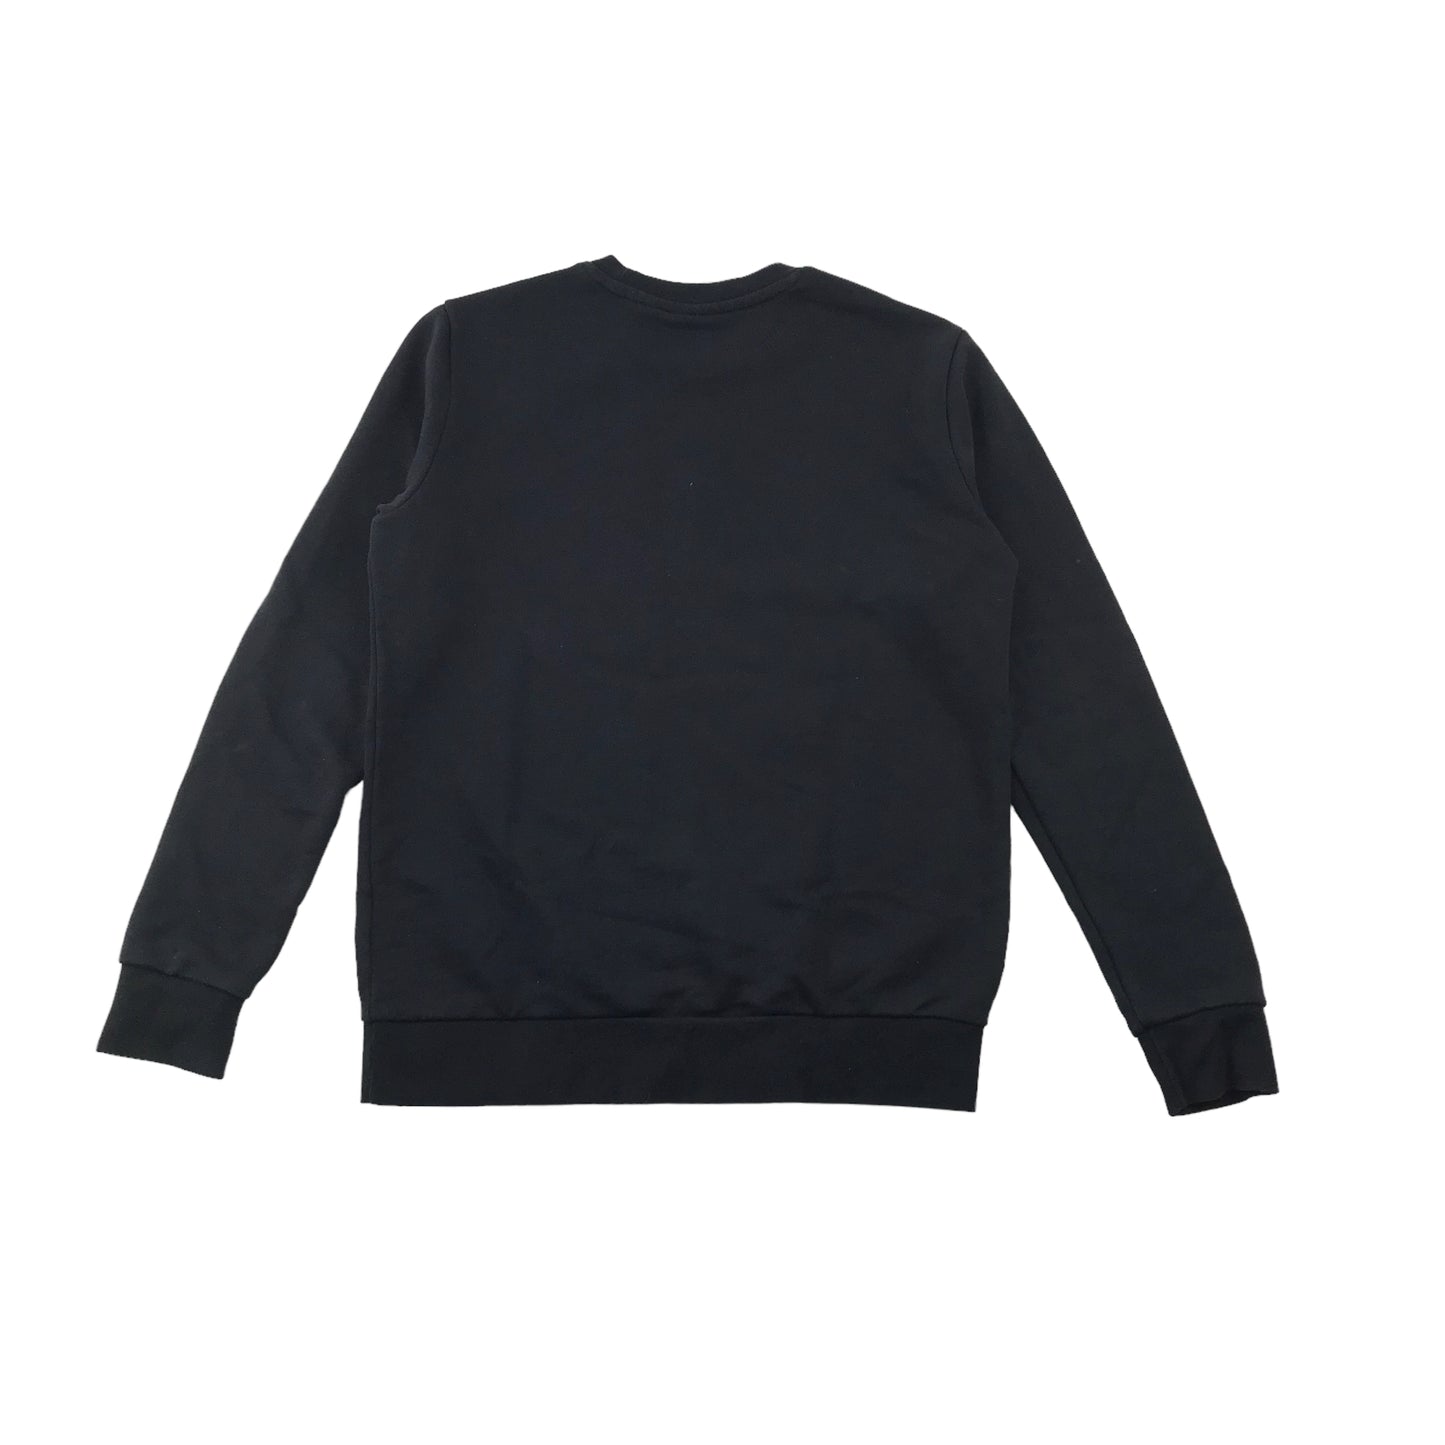 Adidas Classic Black Logo Sweatshirt Age 13